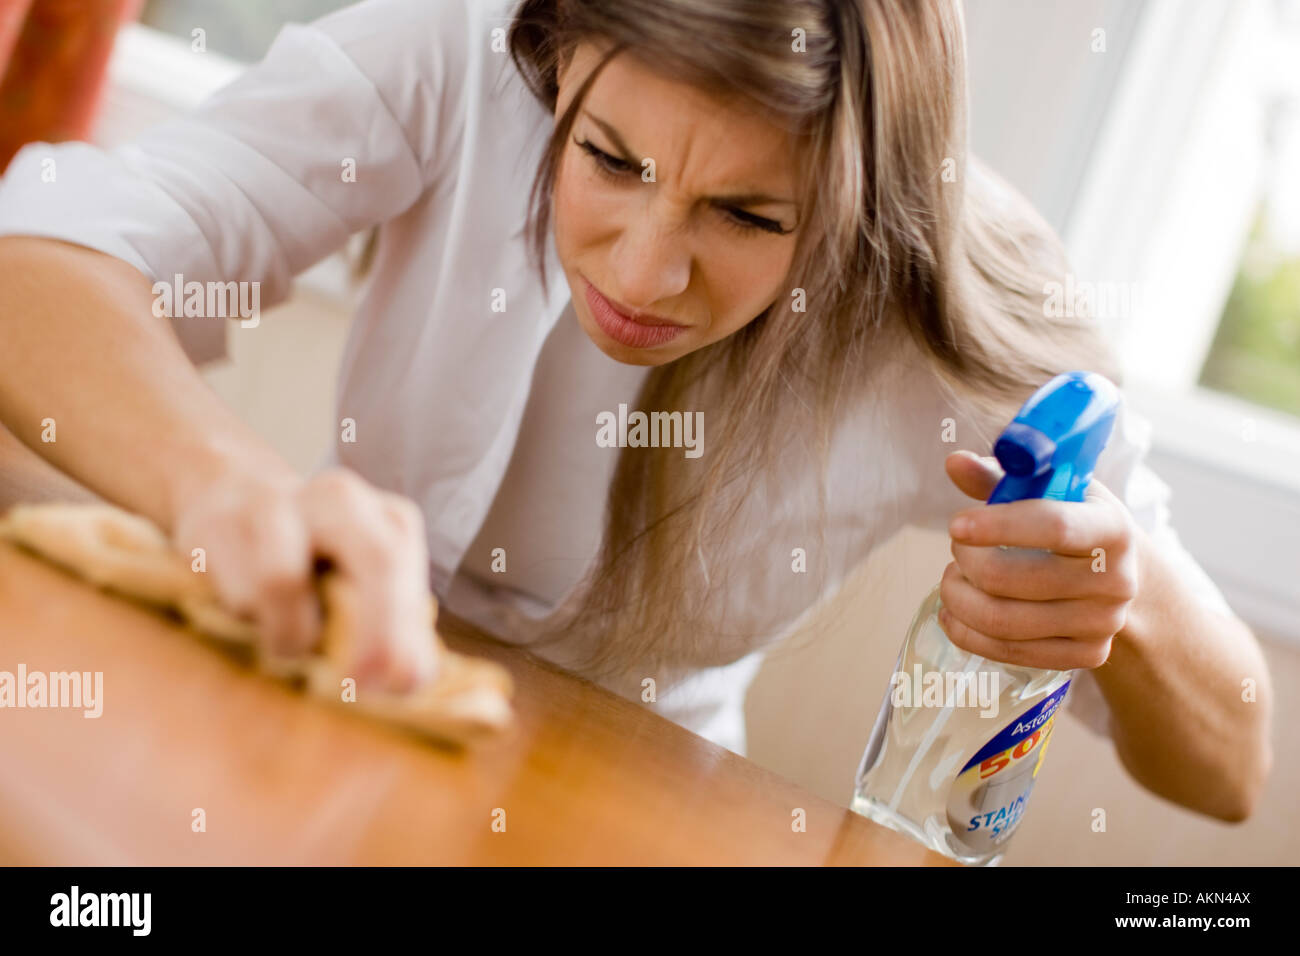 Woman polishing table Stock Photo